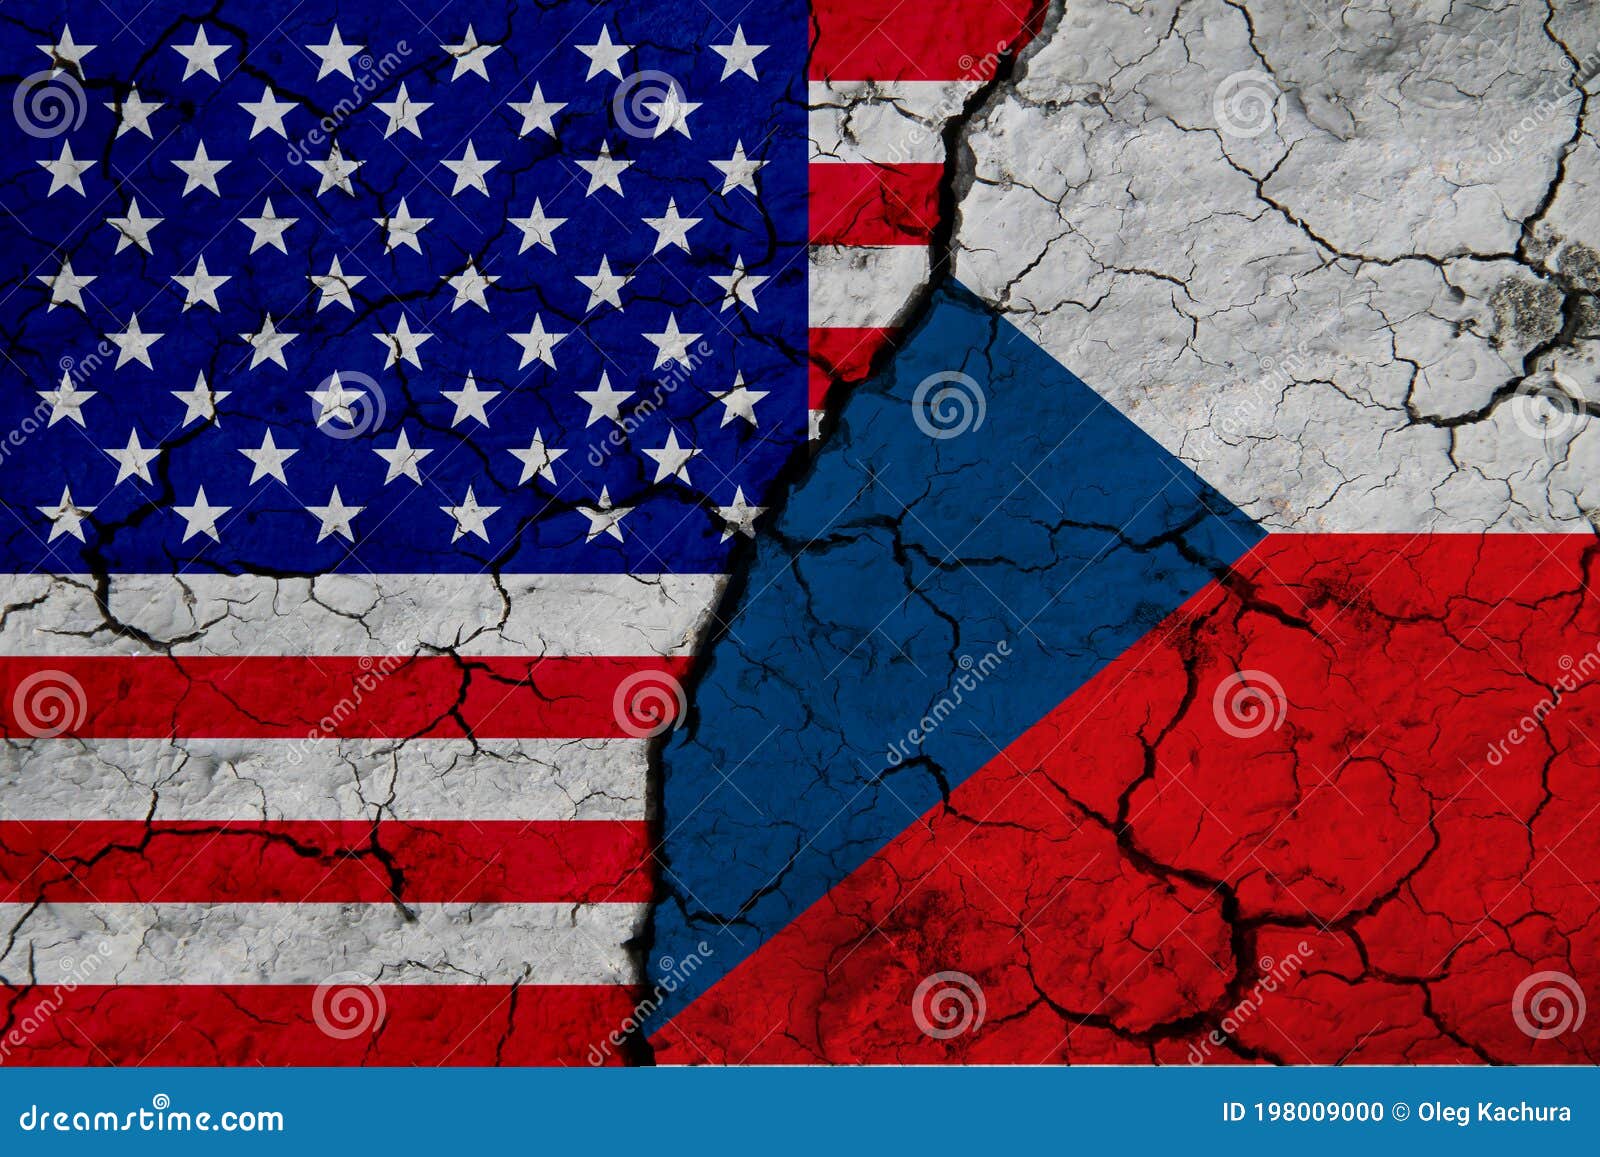 Emoji holding Russian flag, emoticon waving national flag of Russian  Federation 3d rendering Stock Illustration